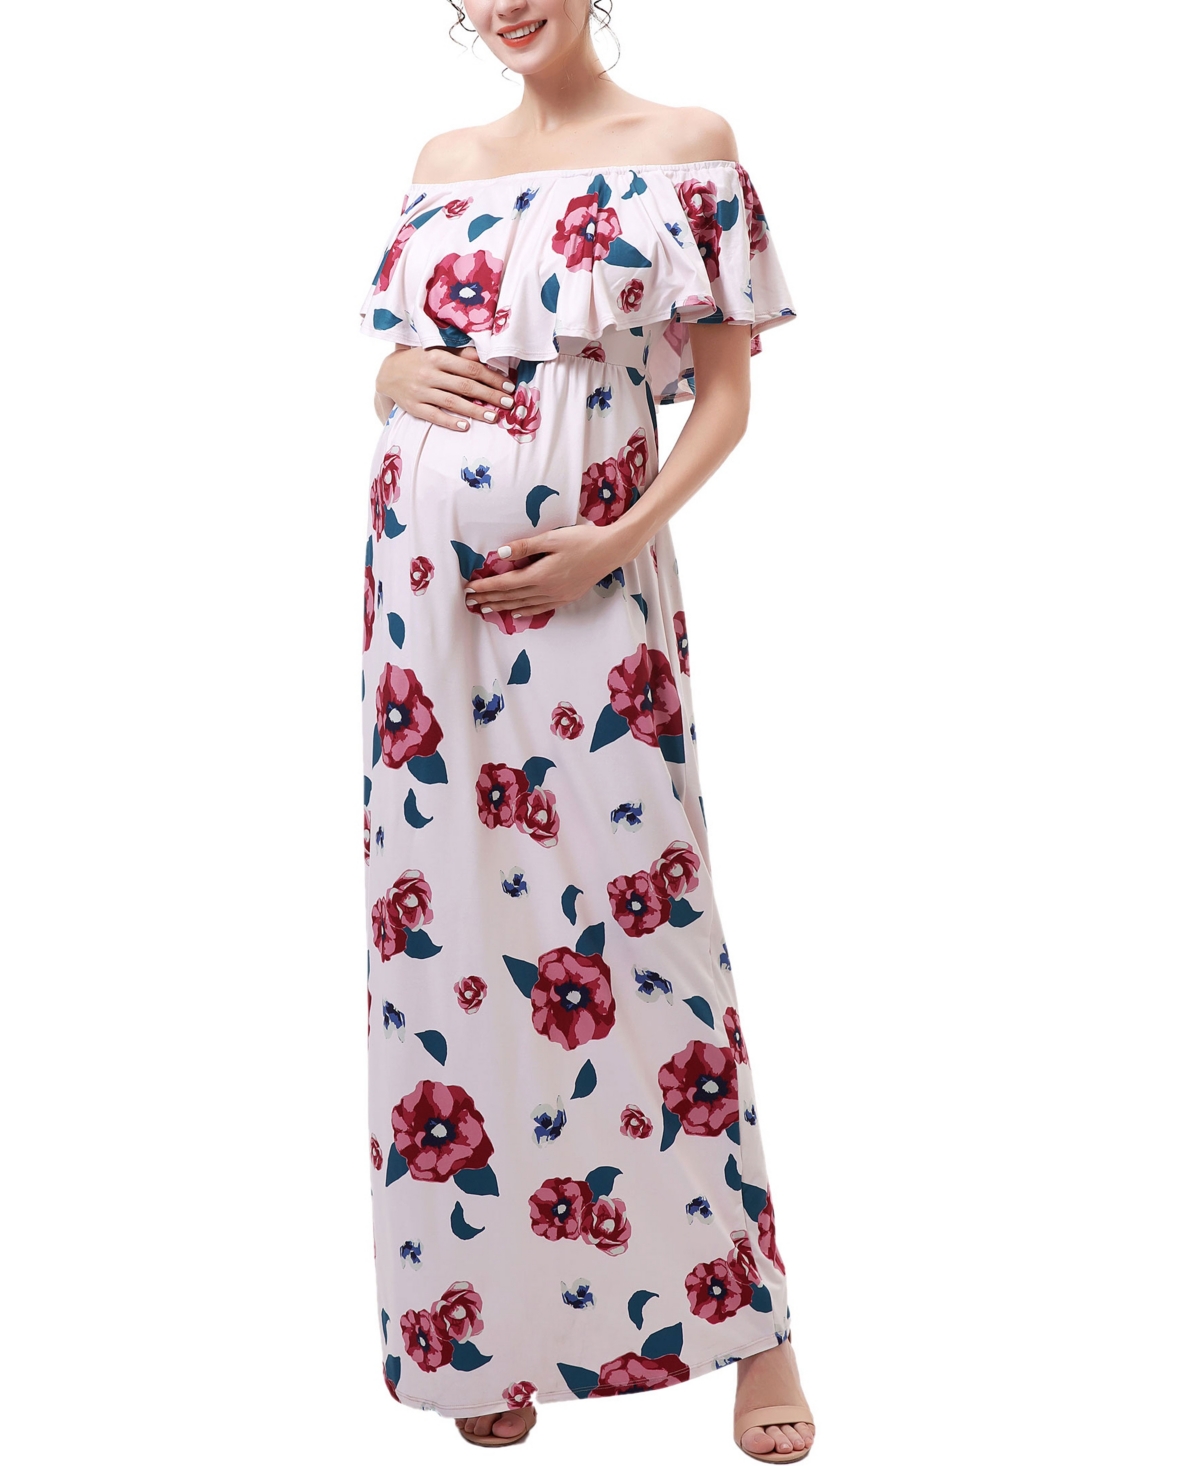 kimi + kai Maternity Floral Print Nursing Maxi Dress - Multicolored